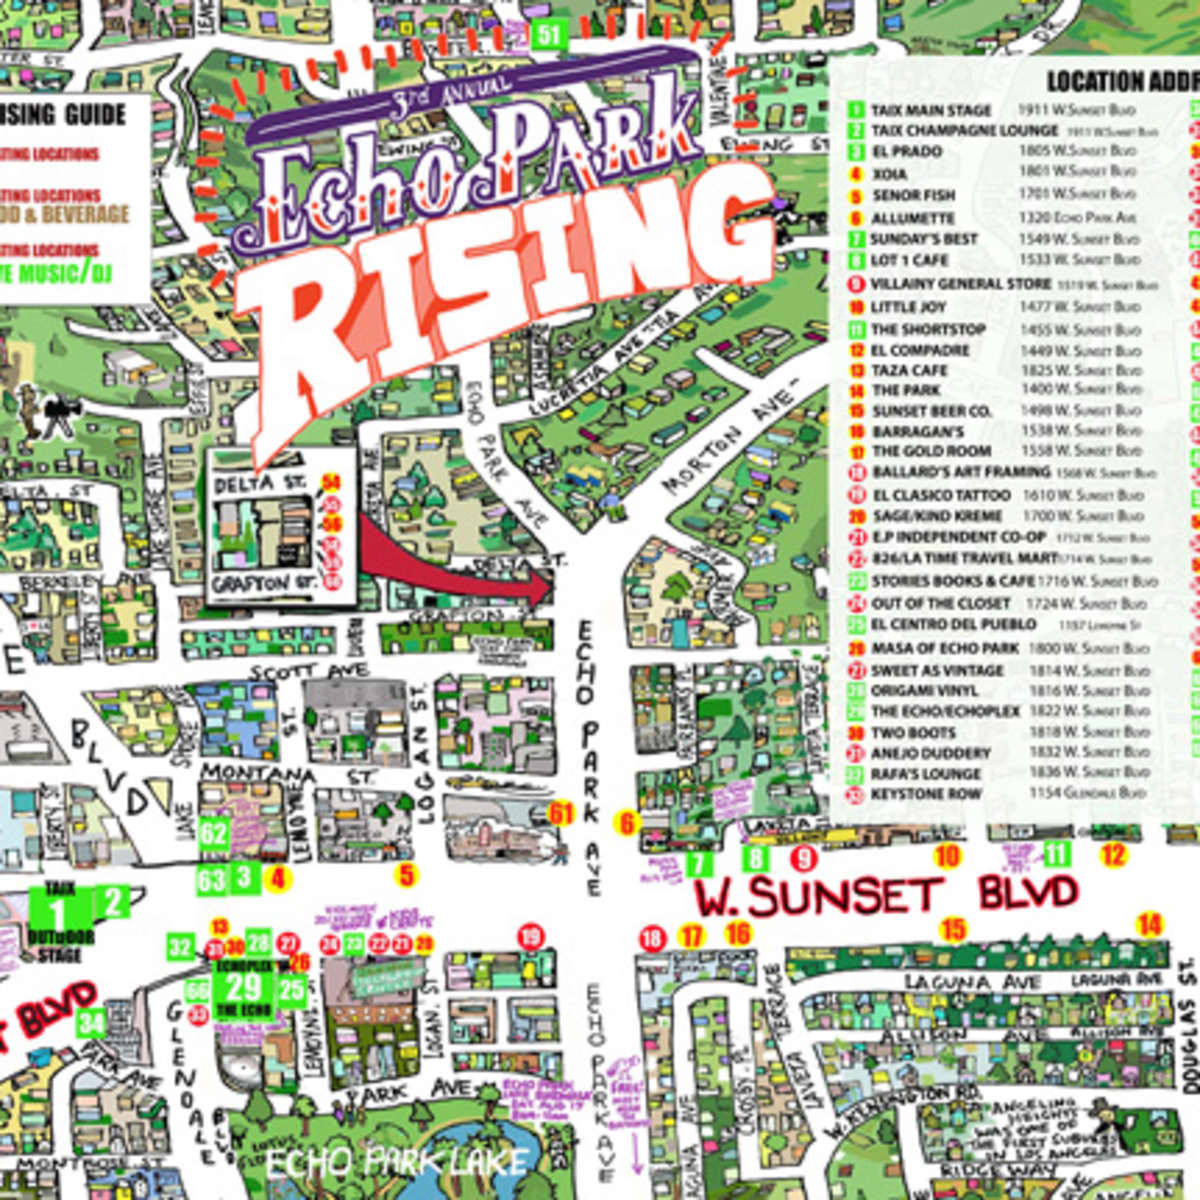 Echo Park Rising Festival will return in 2023 – Daily News